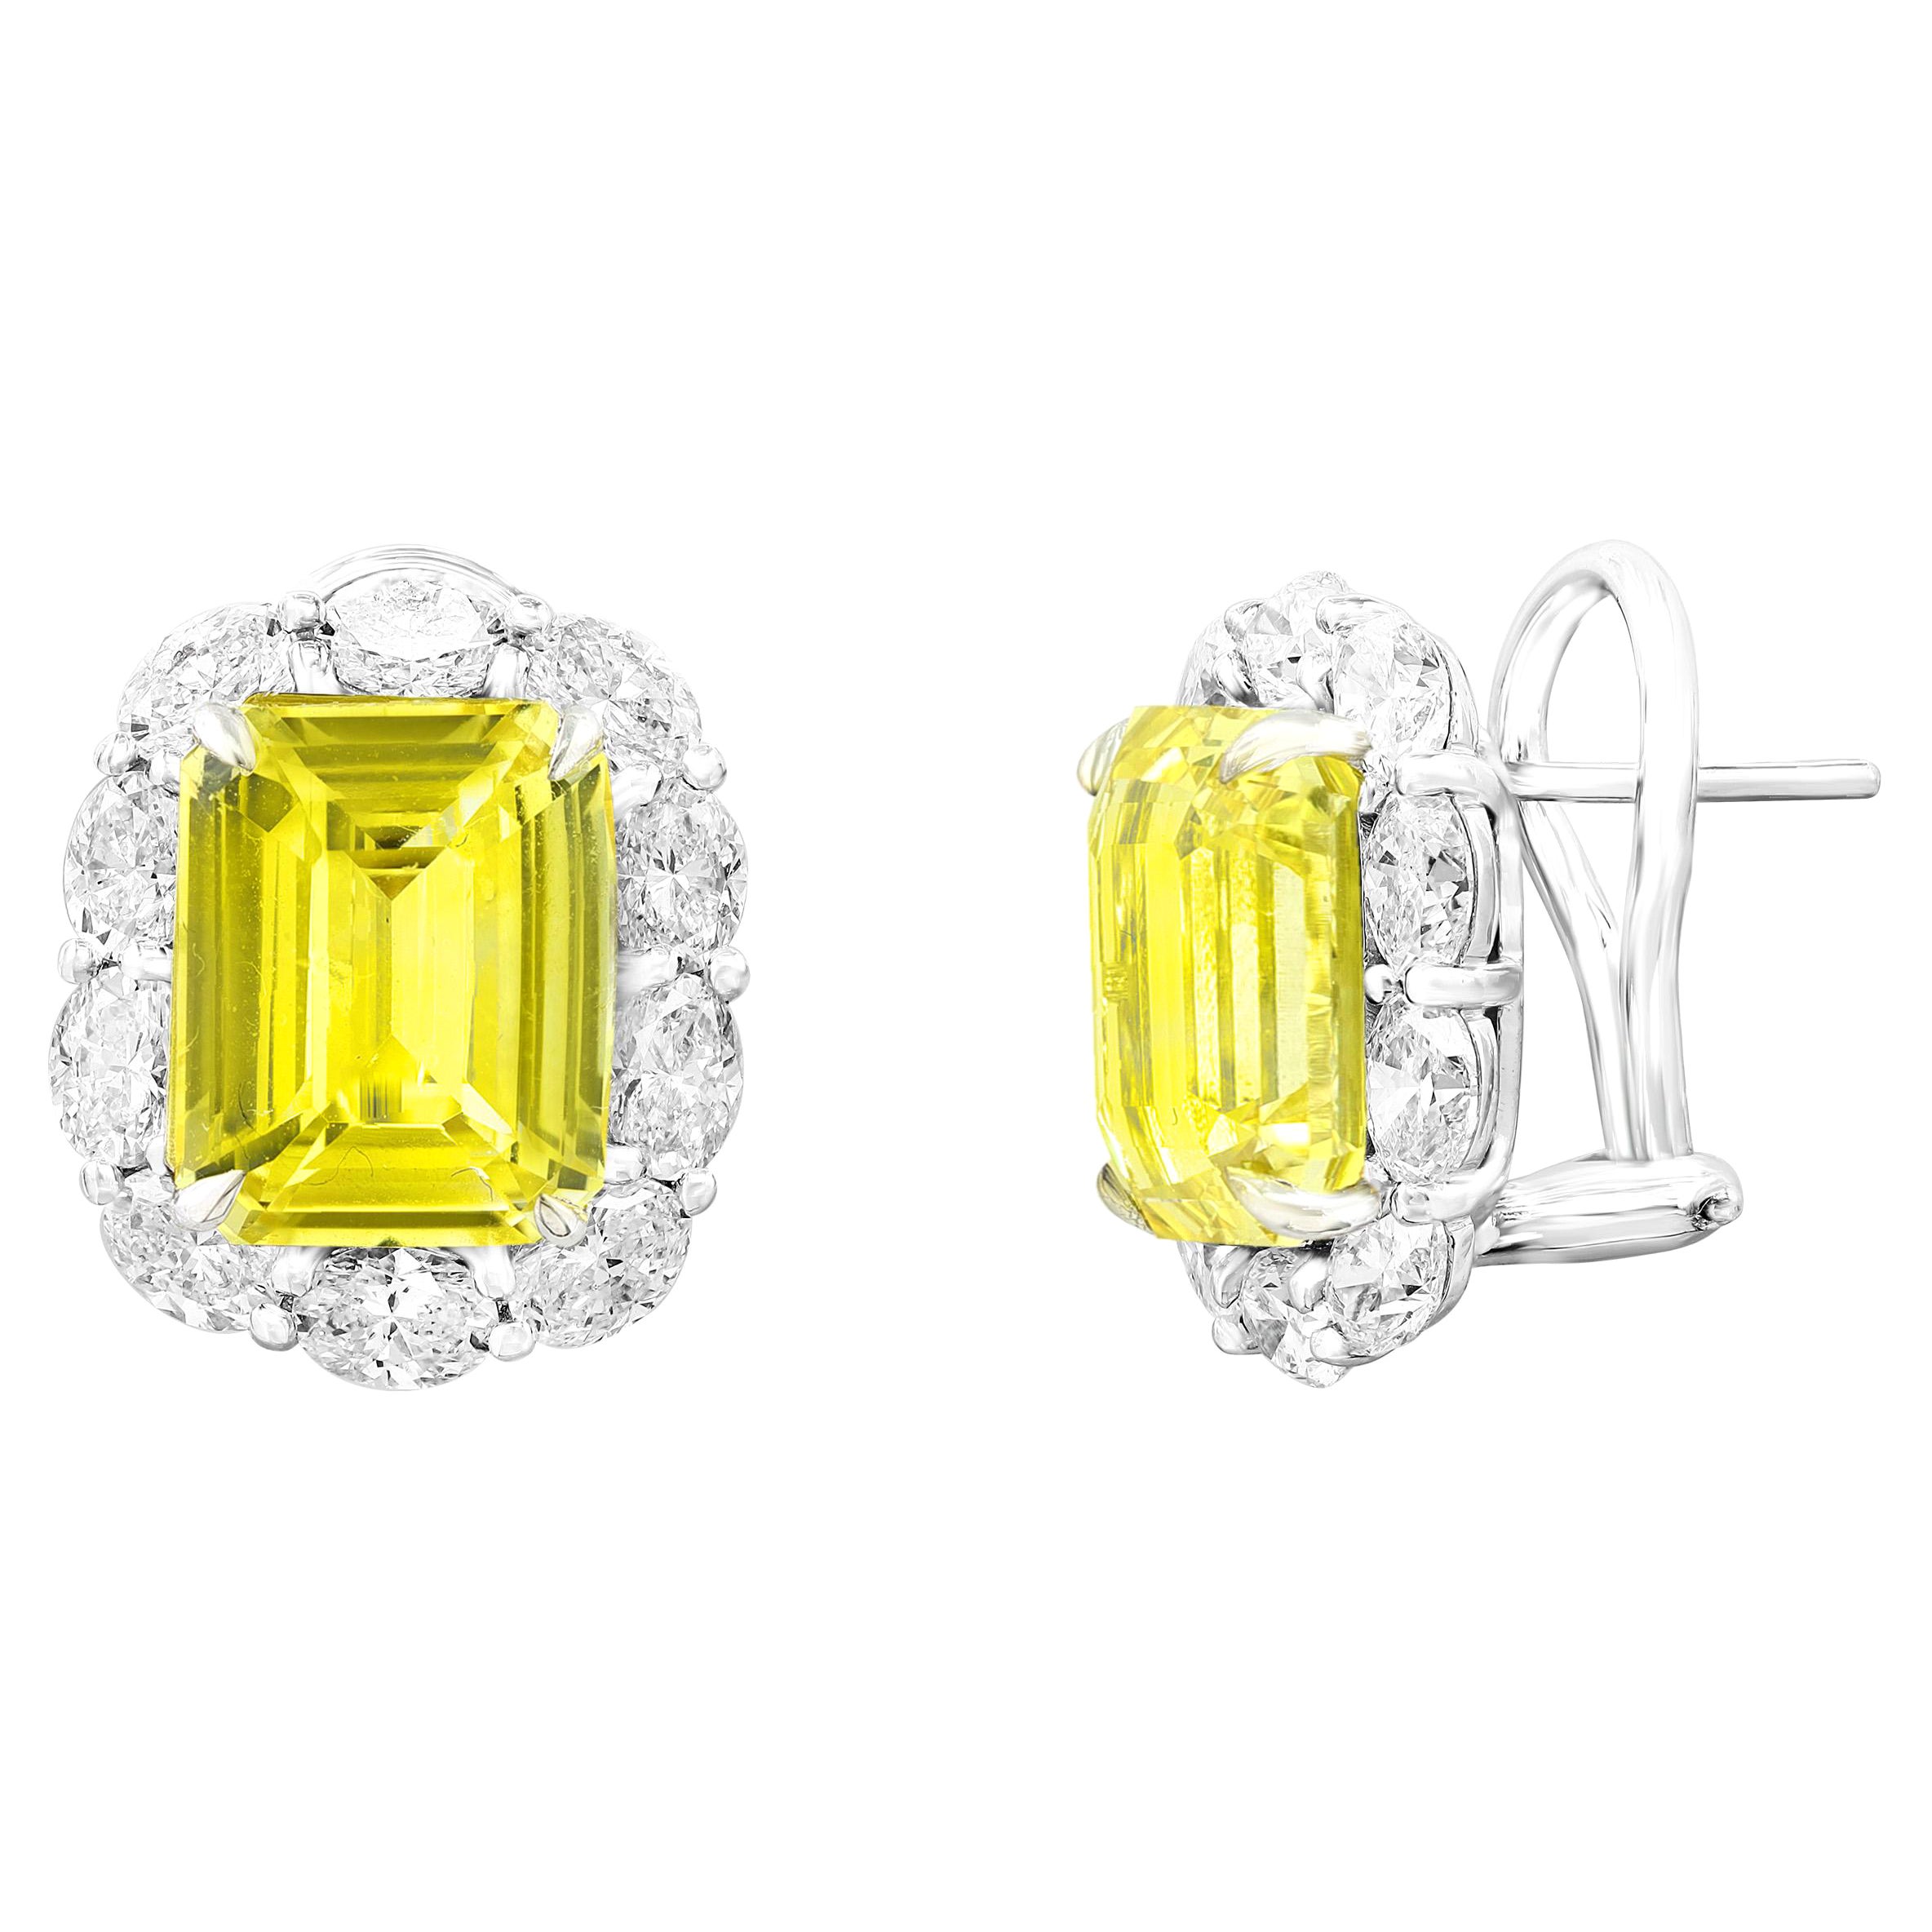 10.09 Carat Emerald Cut Yellow Sapphire Diamond Halo Earring in 18K White Gold